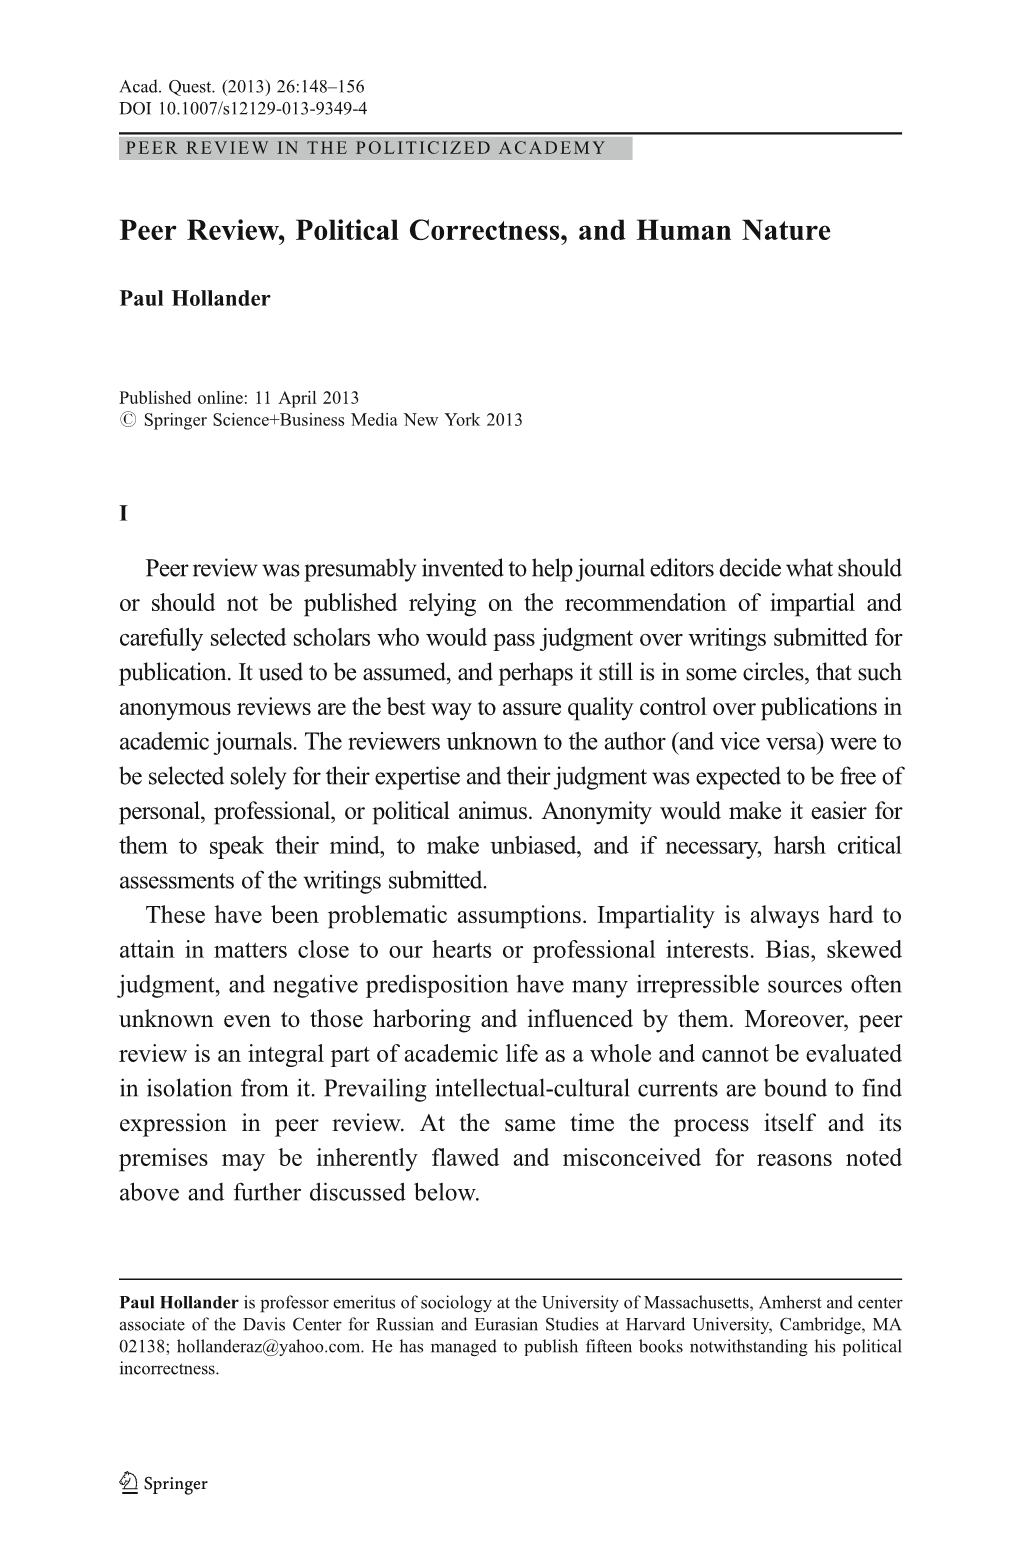 Peer Review, Political Correctness, and Human Nature